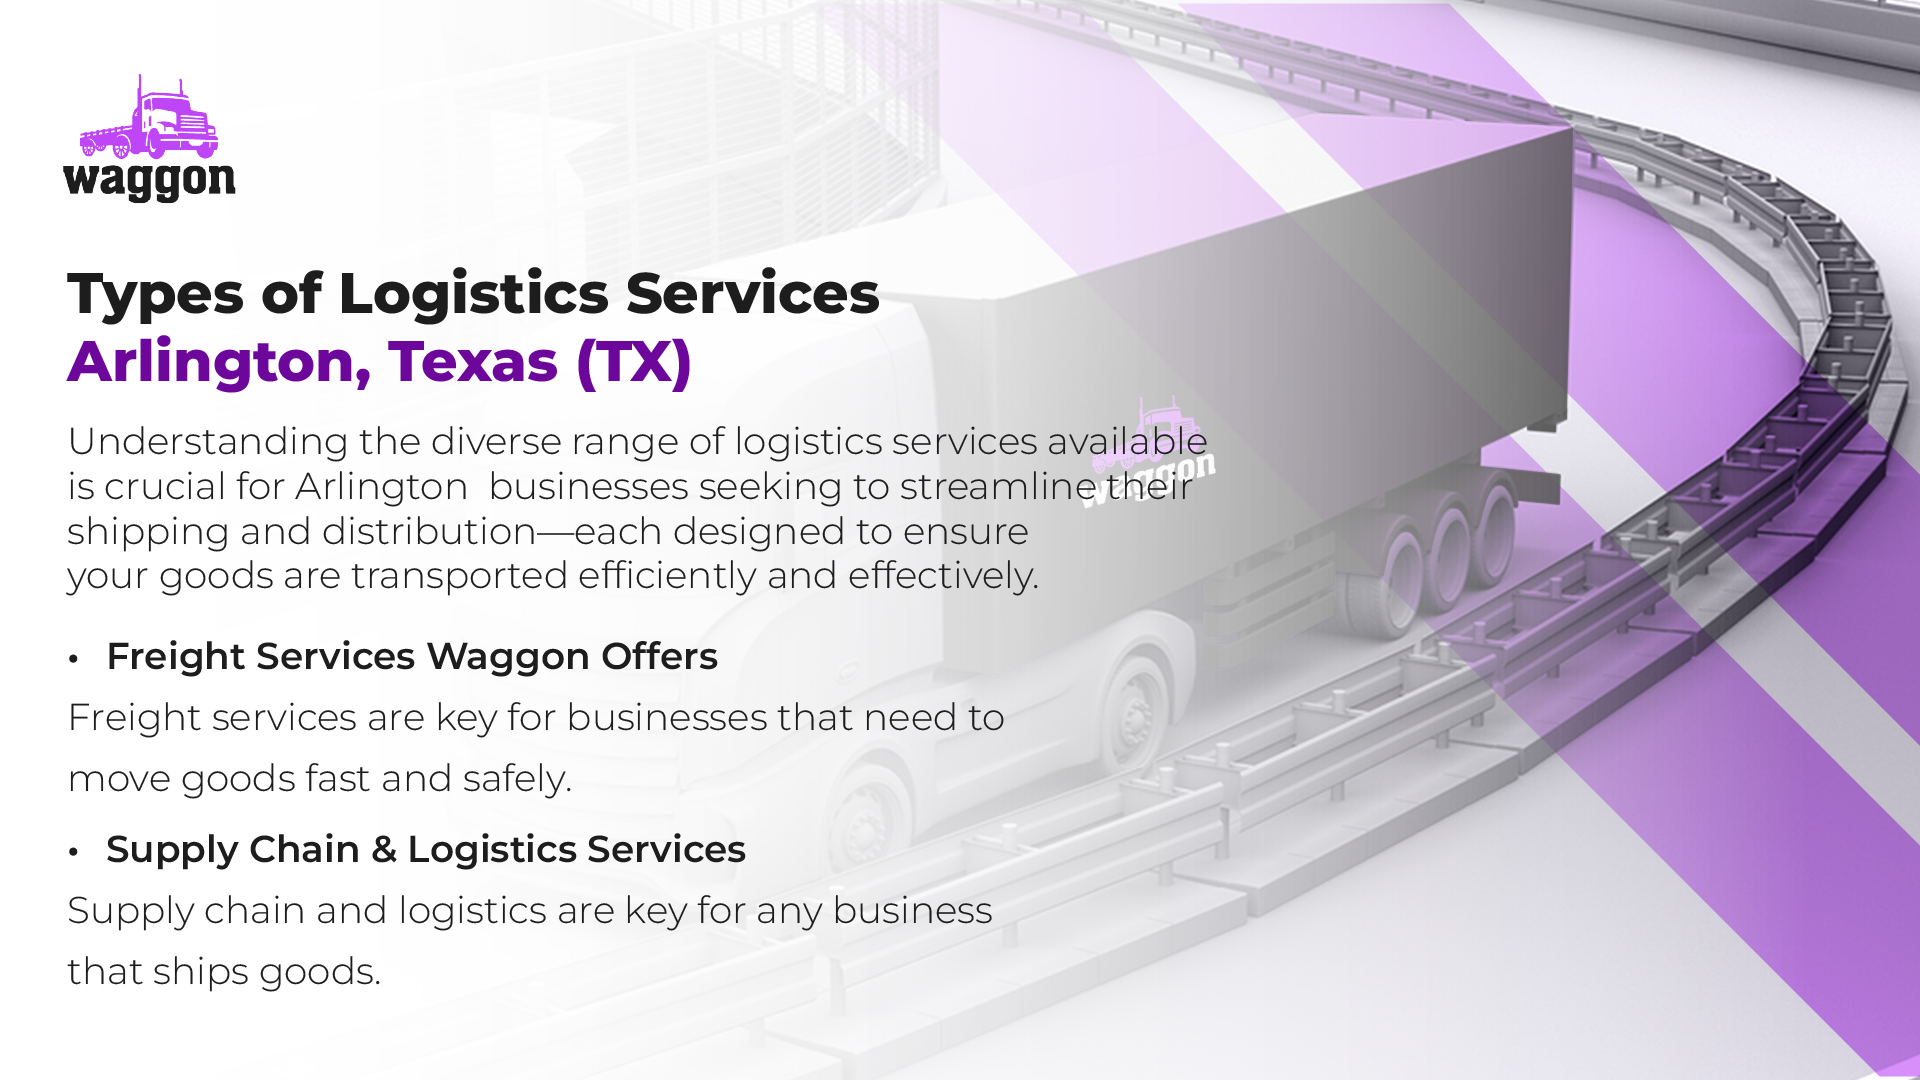 Types of Logistics Services in Arlington, Texas (TX)